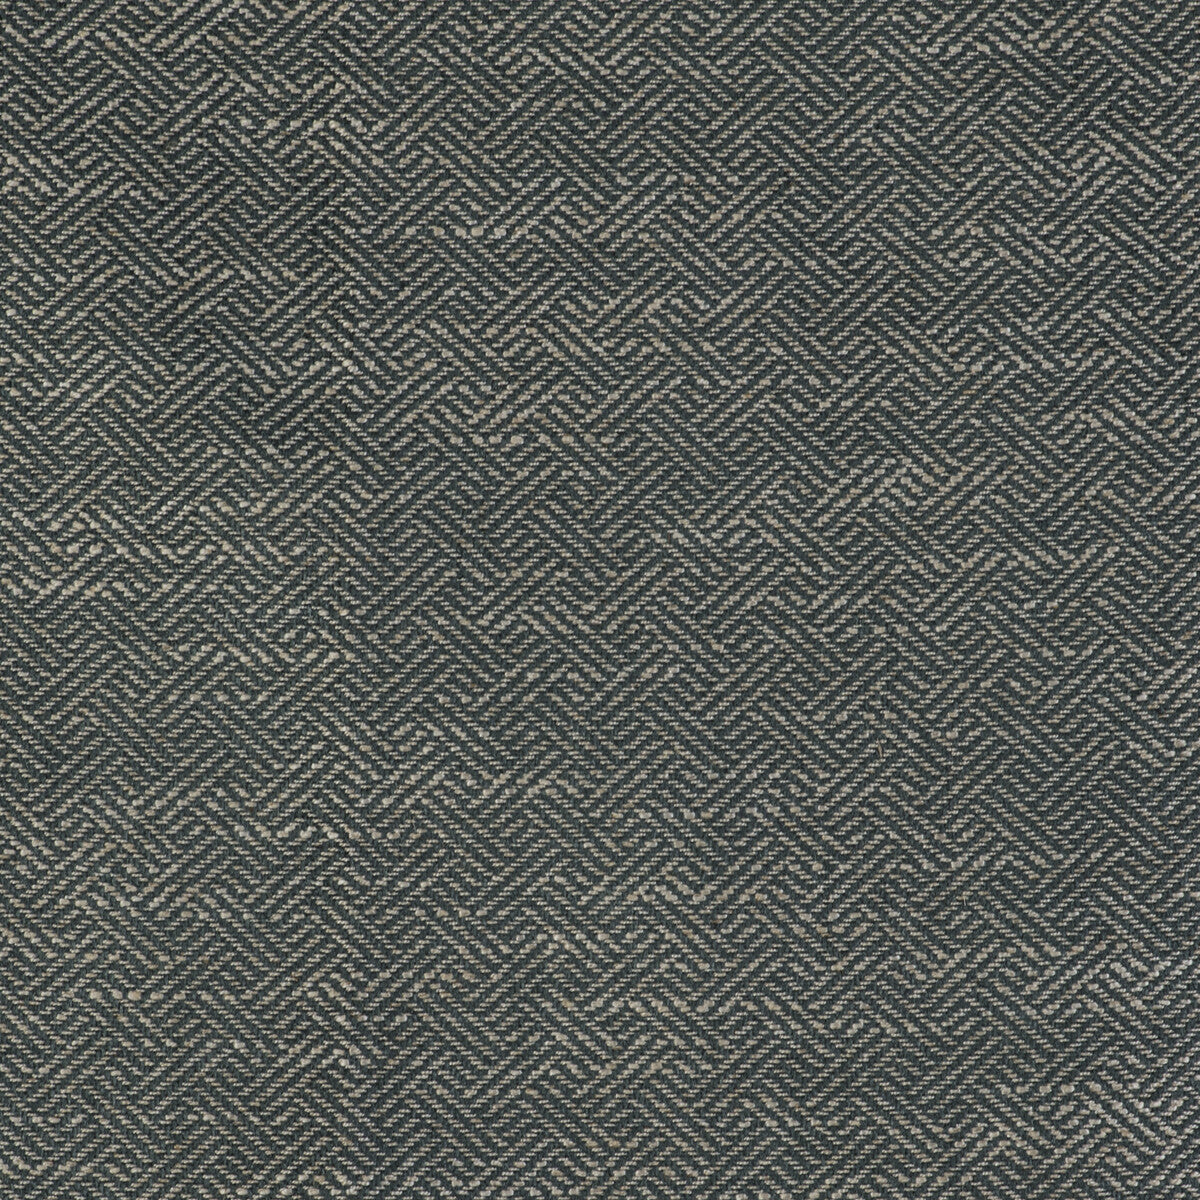 Enea fabric in oceano color - pattern GDT5518.010.0 - by Gaston y Daniela in the Gaston Libreria collection